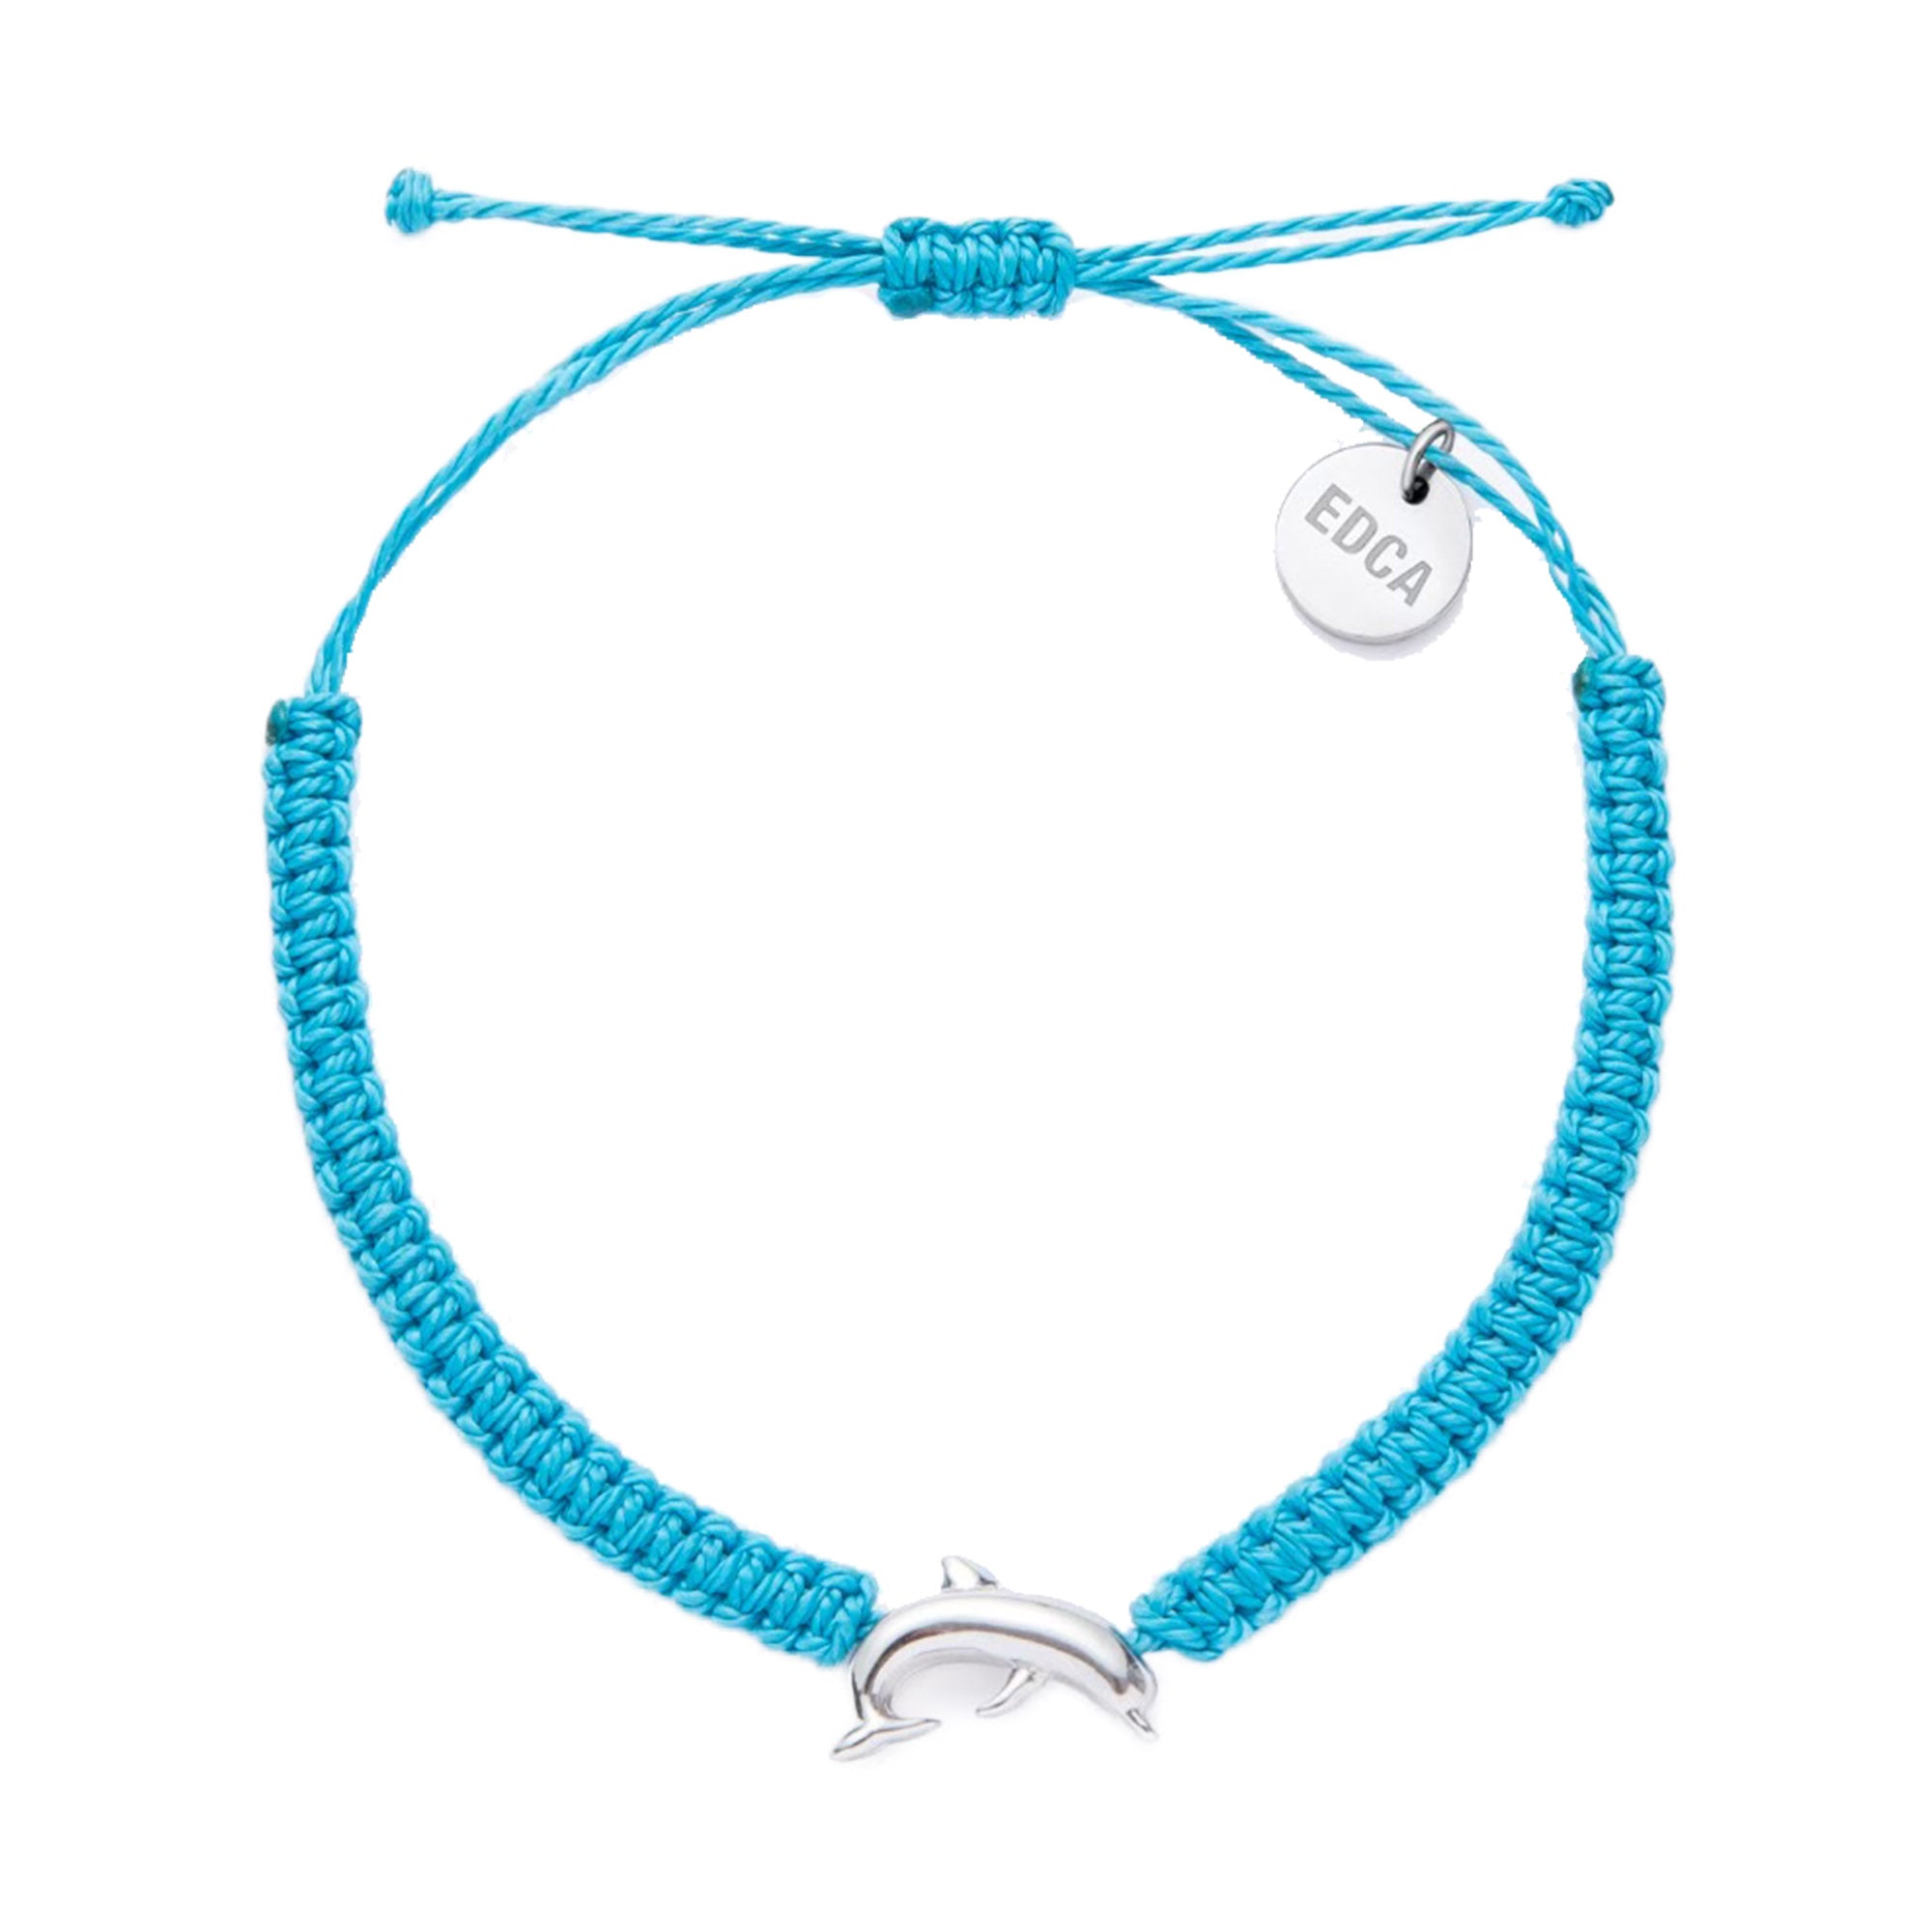 EDCA Mauka Charm Bracelet  - blue bracelet with dolphin charm